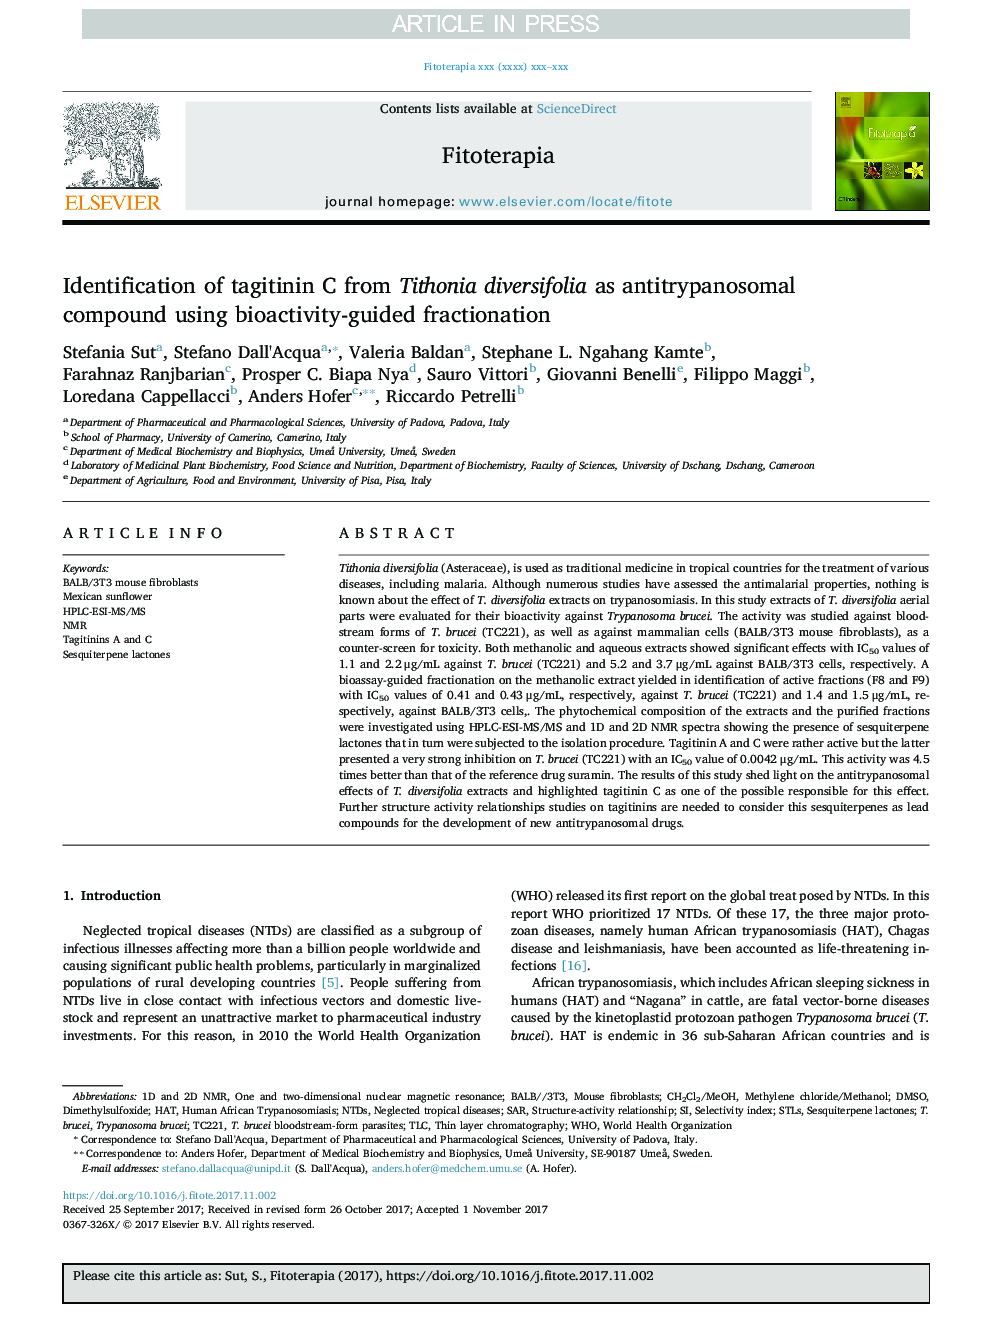 Identification of tagitinin C from Tithonia diversifolia as antitrypanosomal compound using bioactivity-guided fractionation